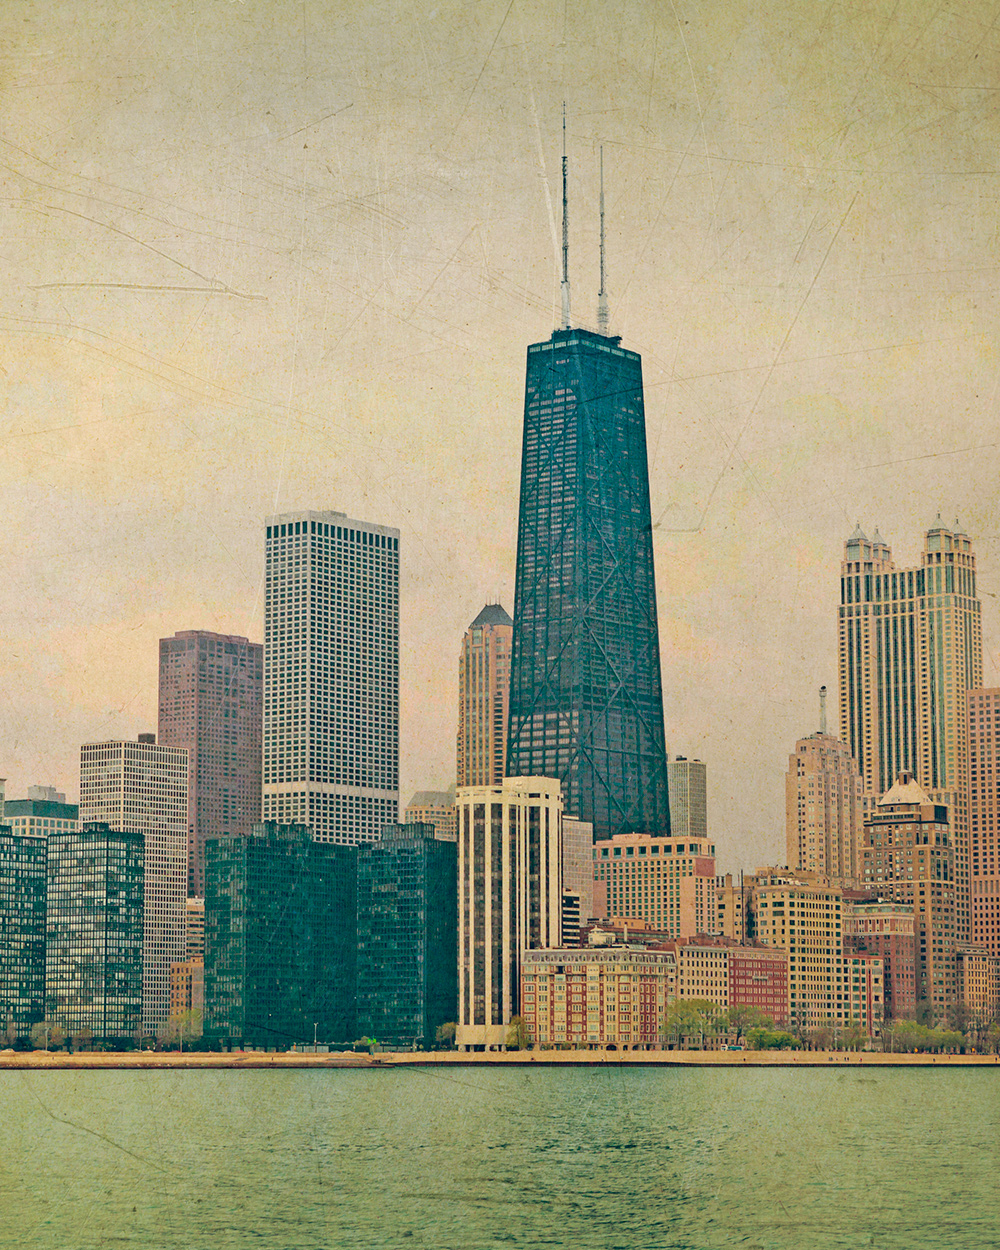 Chicago, Illinois skyline in the 1980's